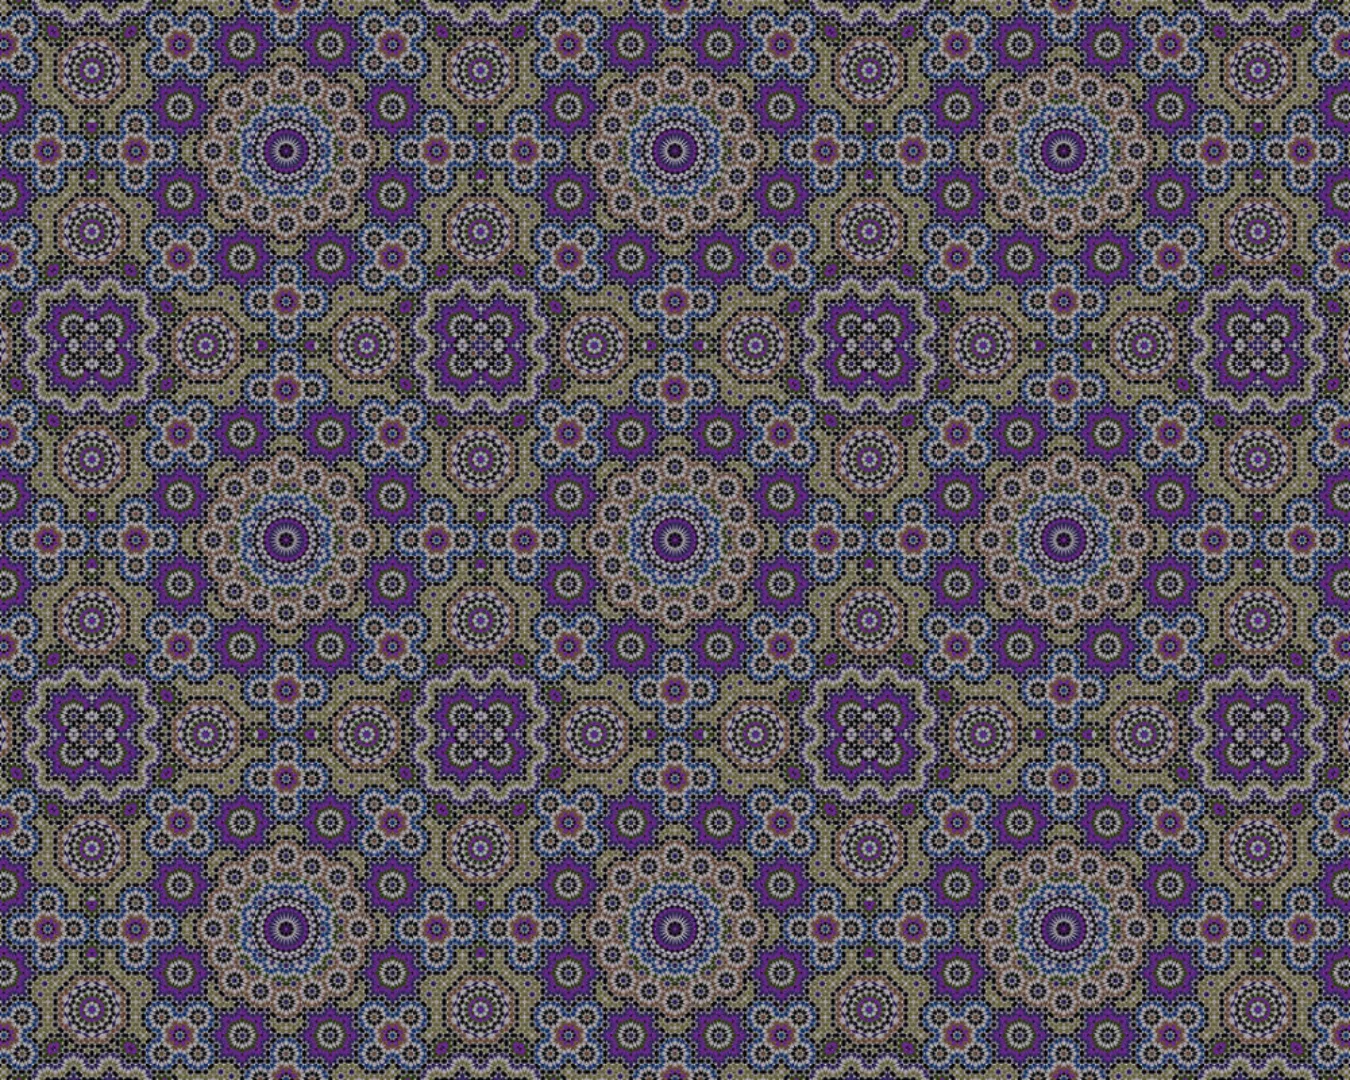 Fototapete "Mosaic III Purple" 4,00x2,50 m / Glattvlies Perlmutt günstig online kaufen